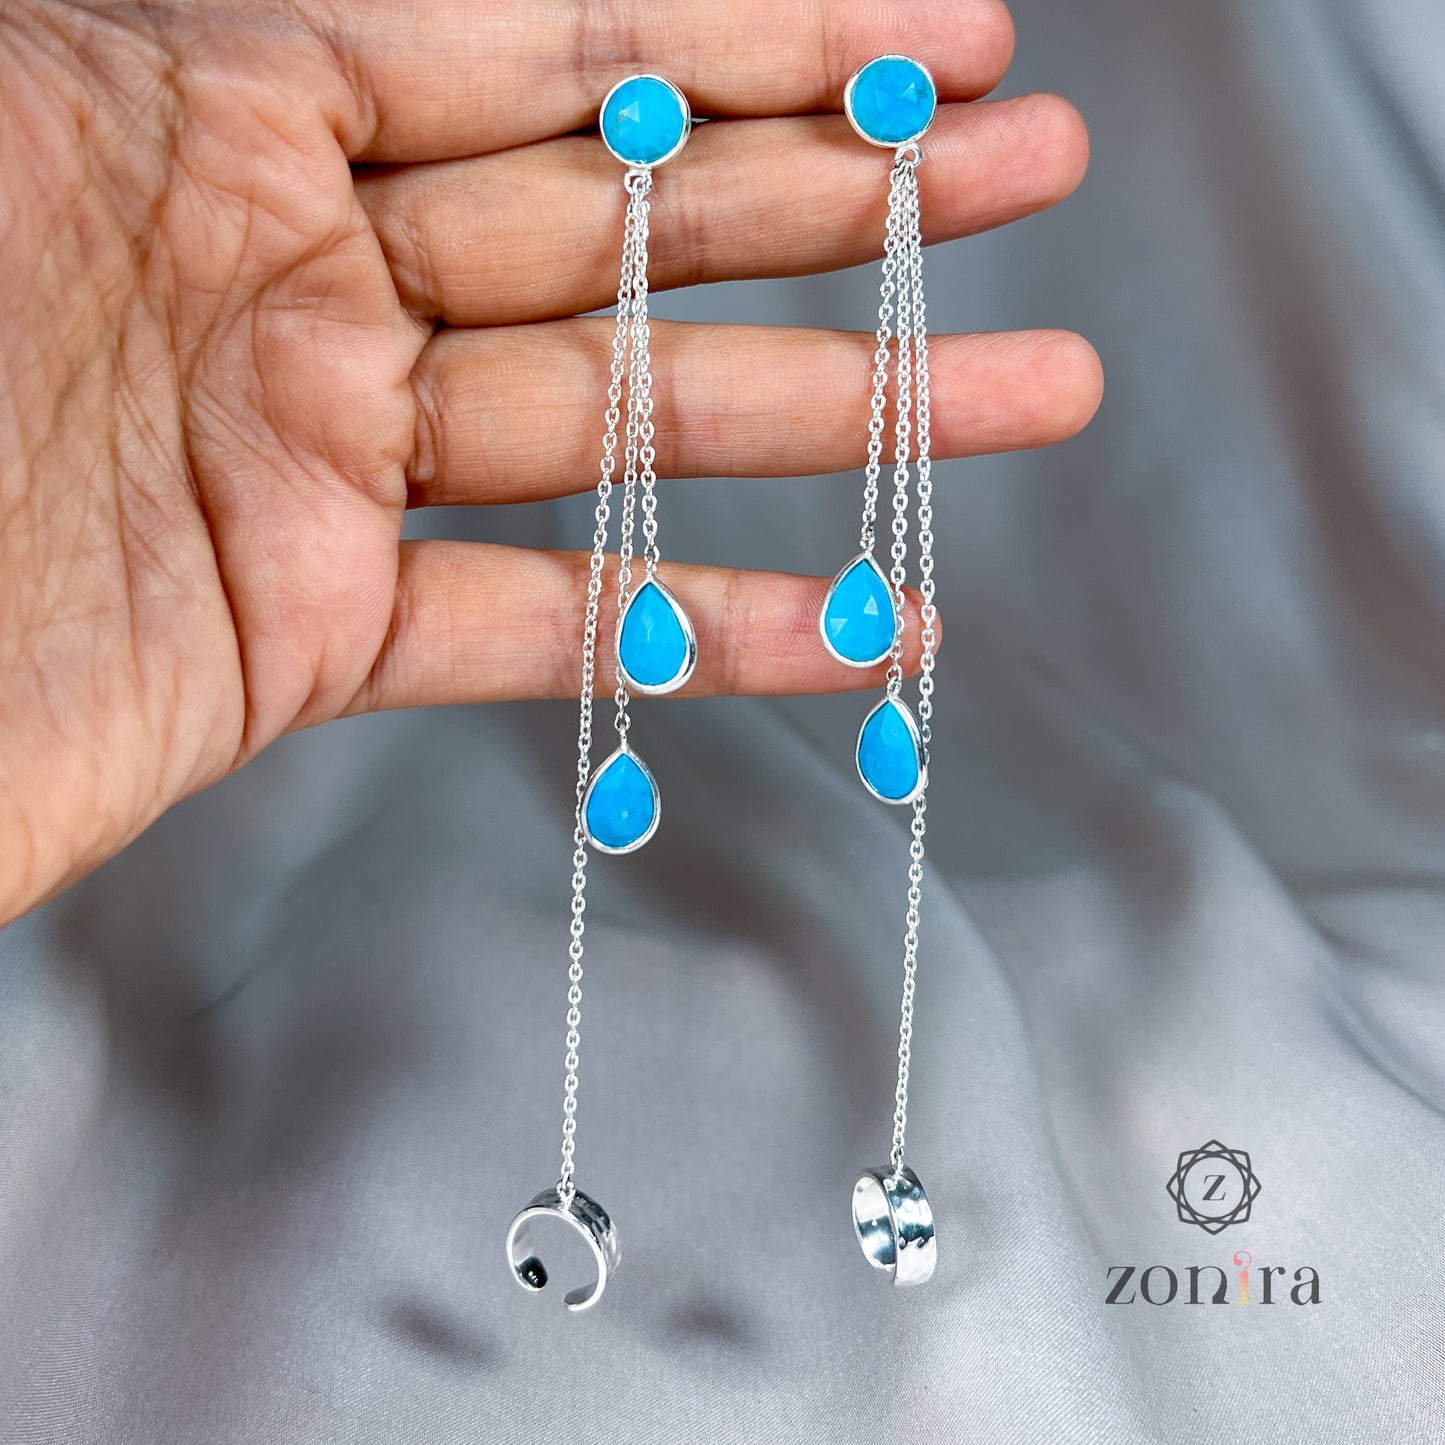 Chanderi Silver Earcuff Danglers - Turquoise